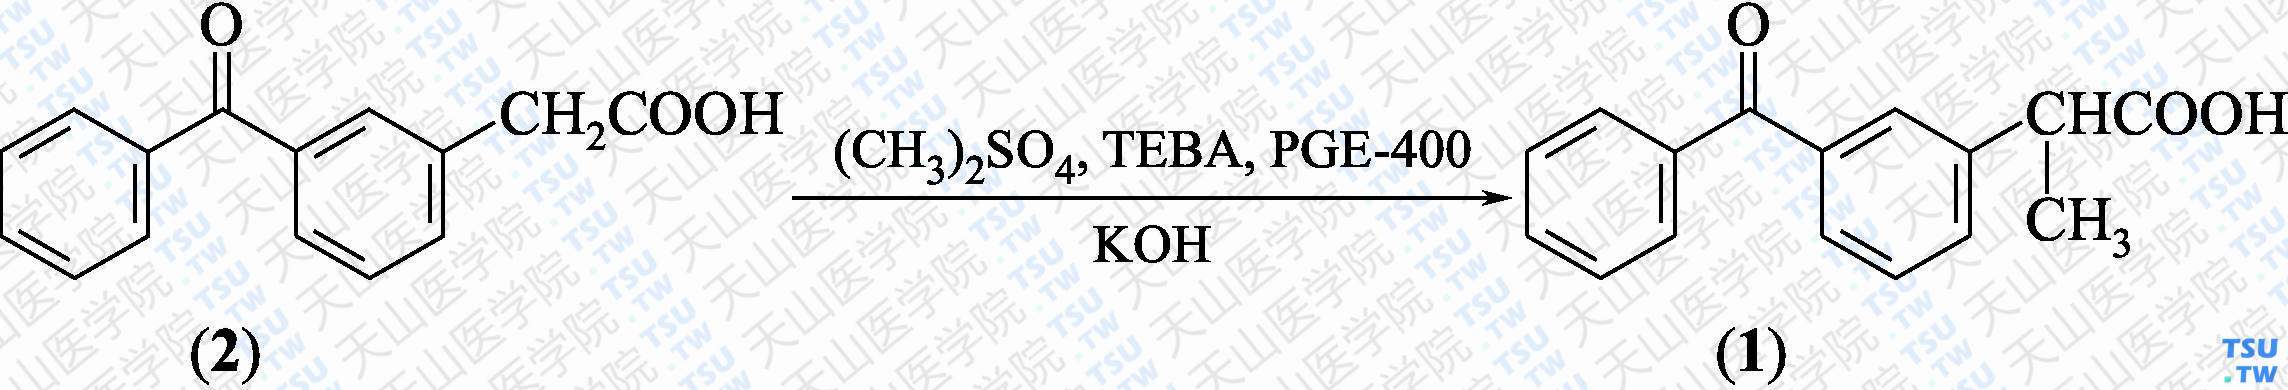 酮基布洛芬（分子式：C<sub>16</sub>H<sub>14</sub>O<sub>3</sub>）的合成方法路线及其结构式